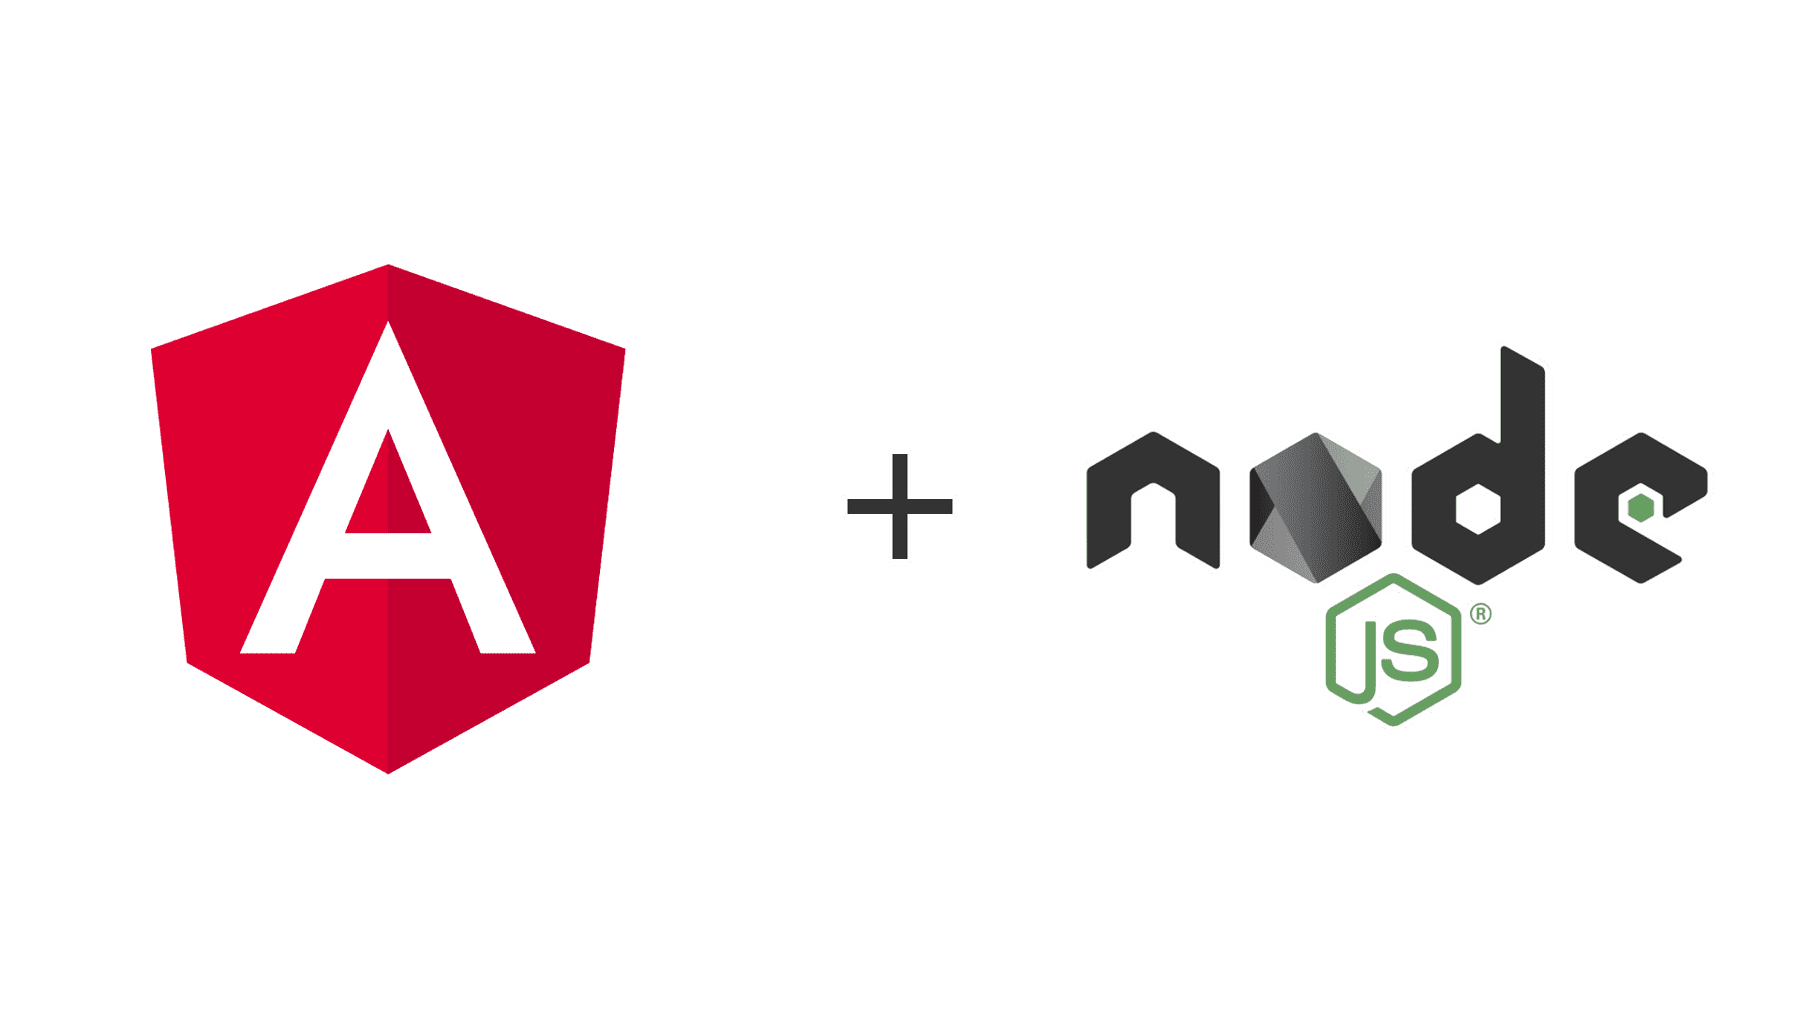 node version angular